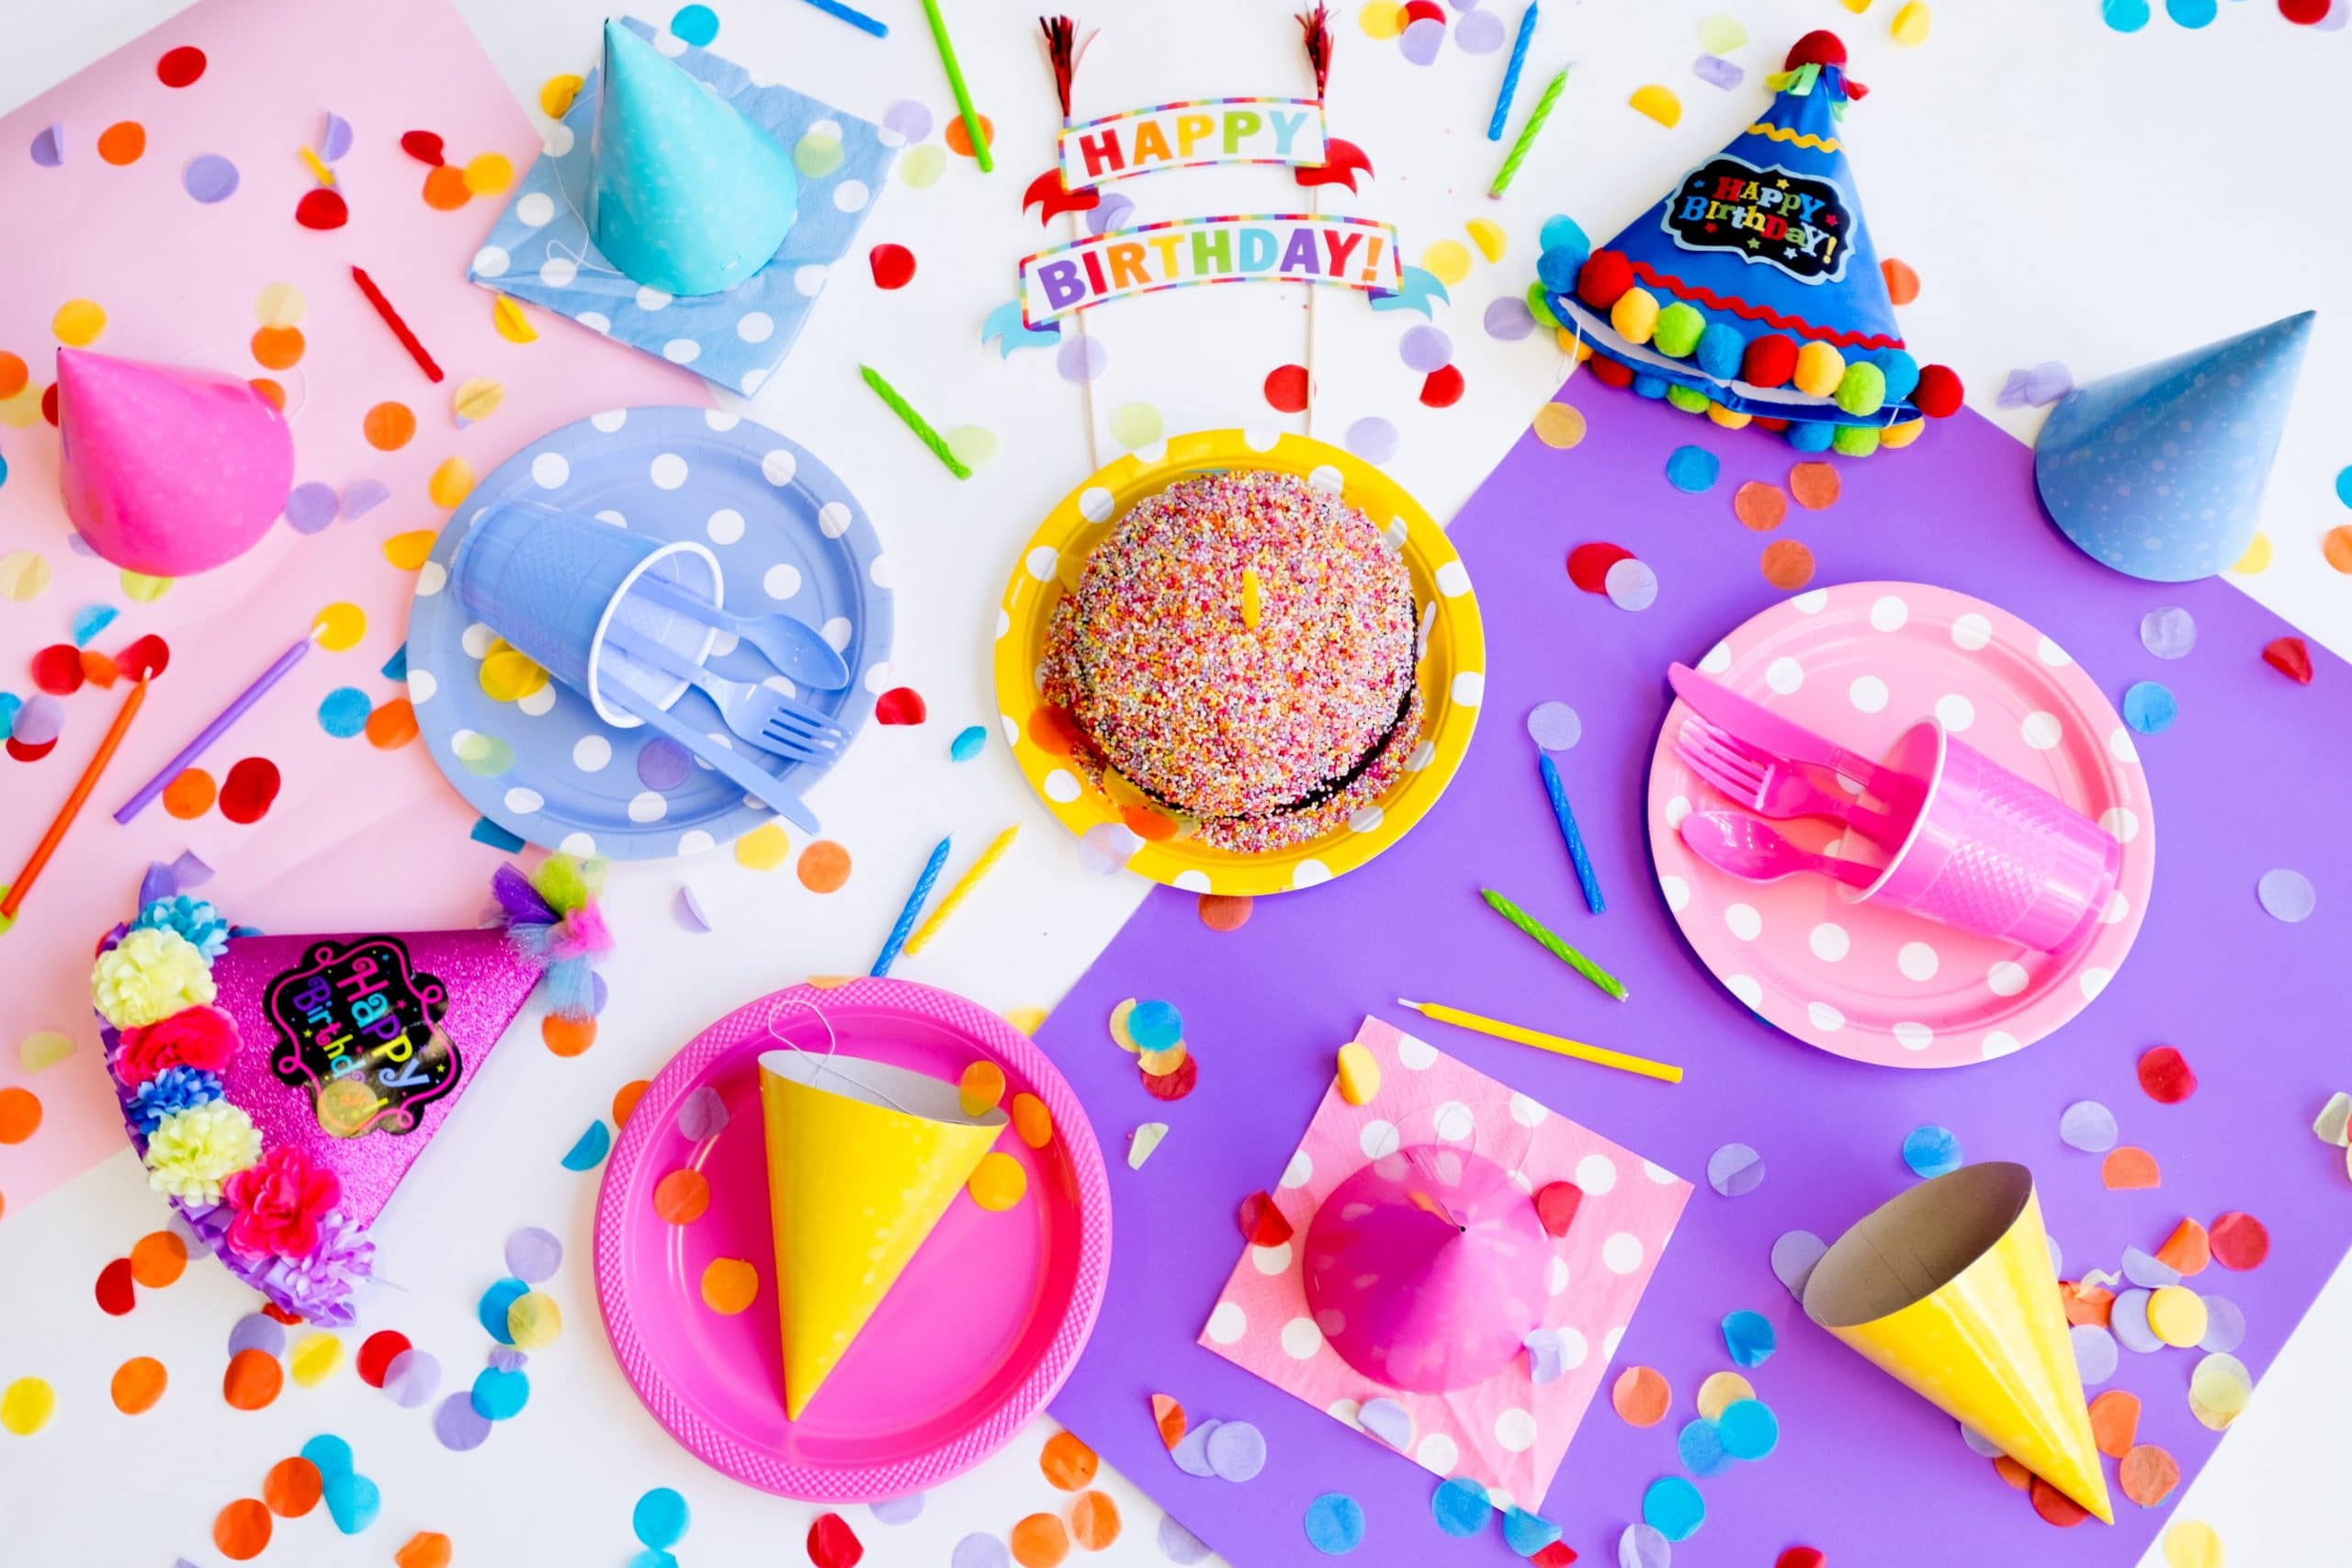 birthday-cake-and-confeti